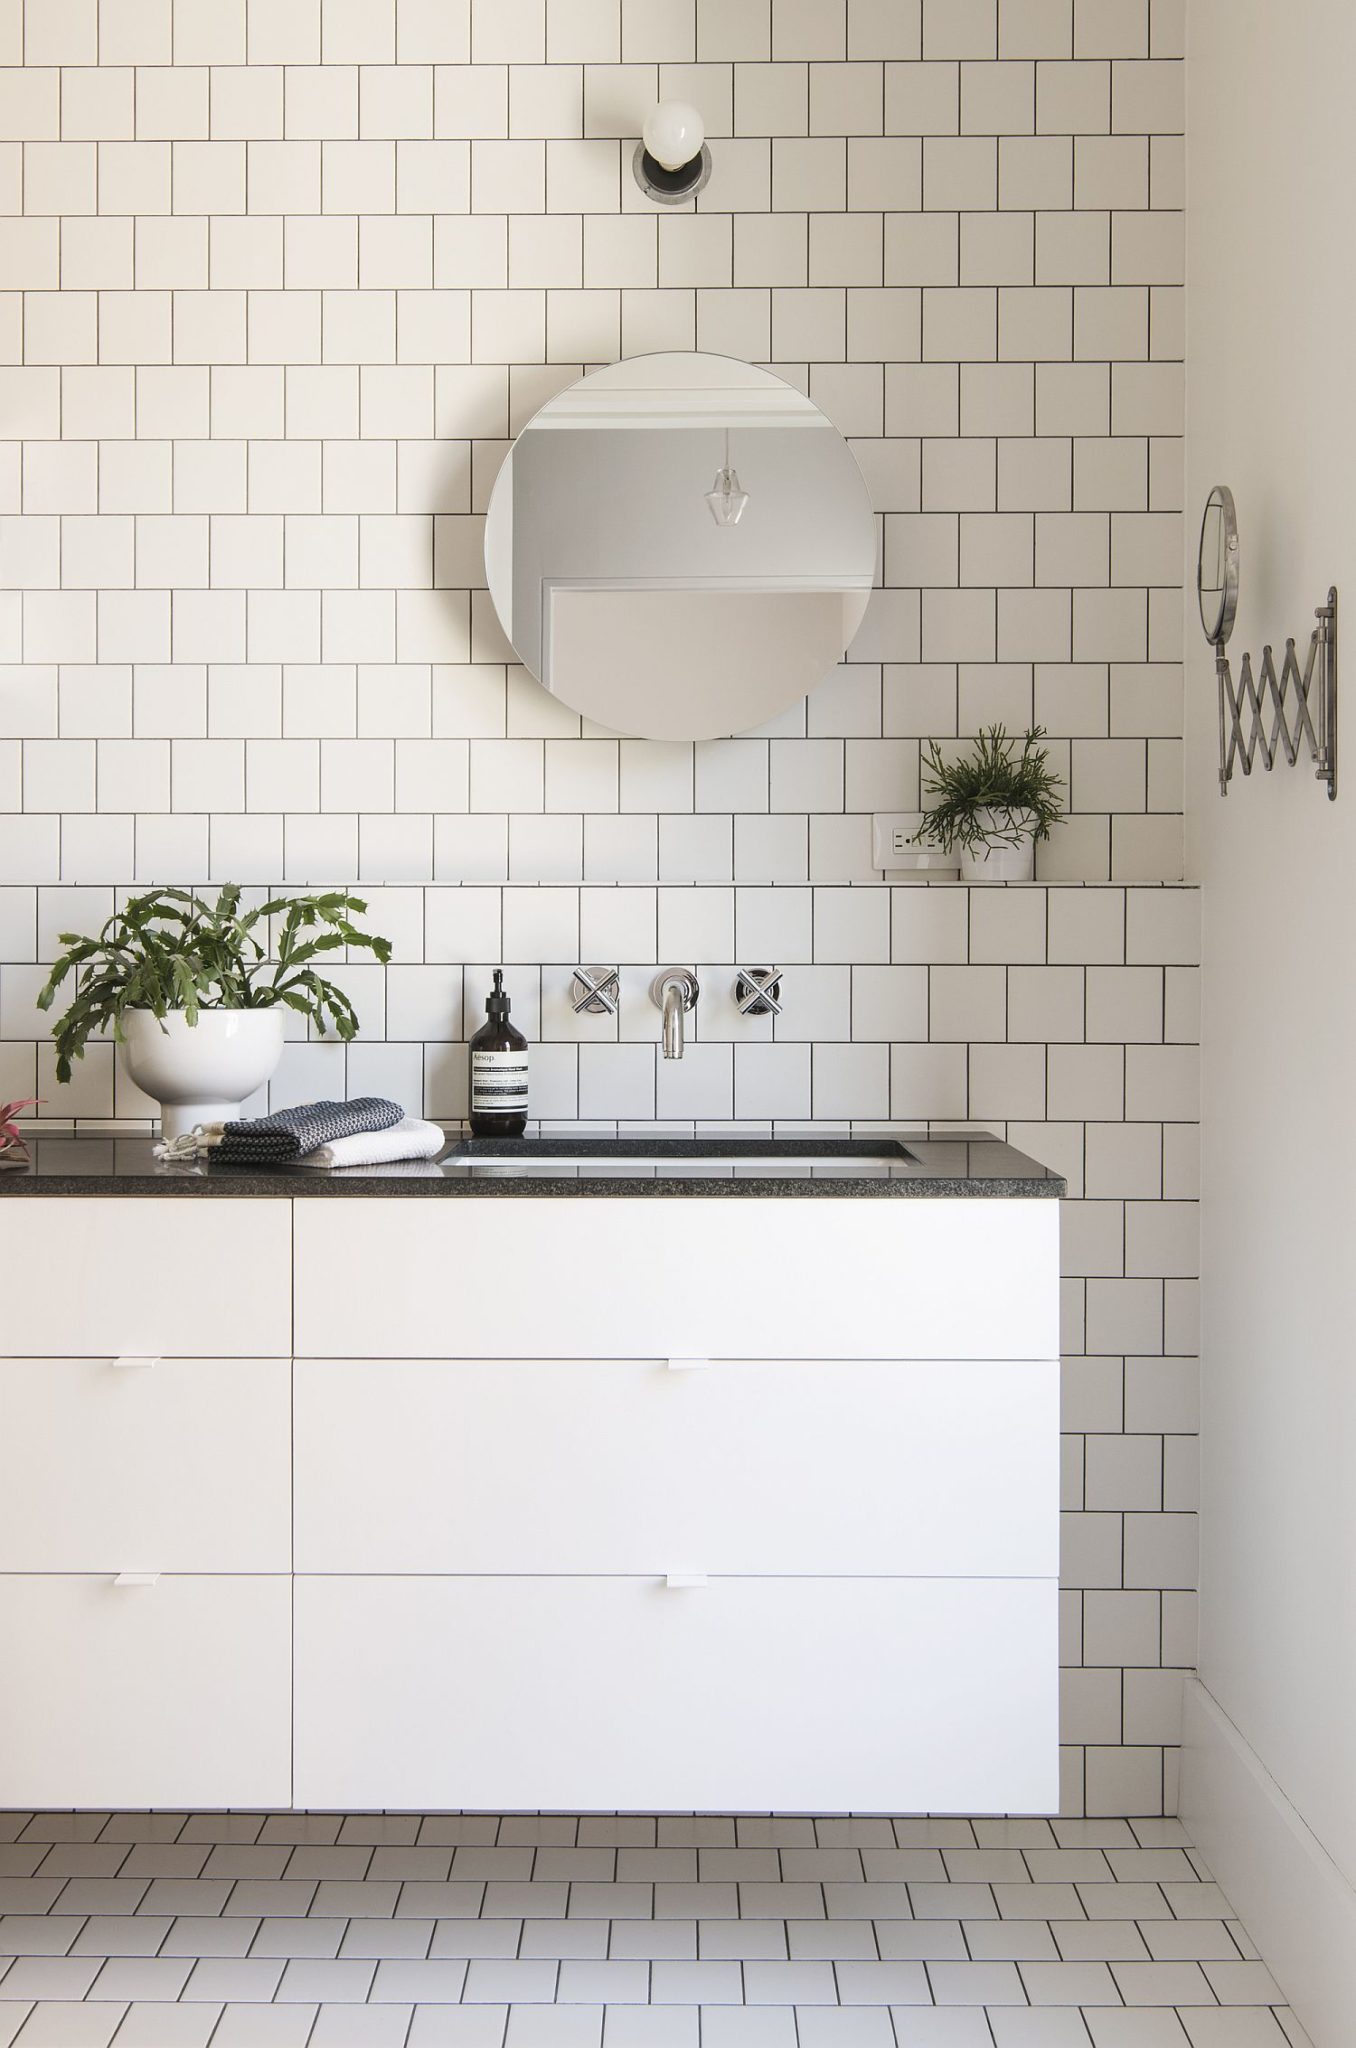 Classic tiled bathroom design translated to modern Brooklyn townhouse